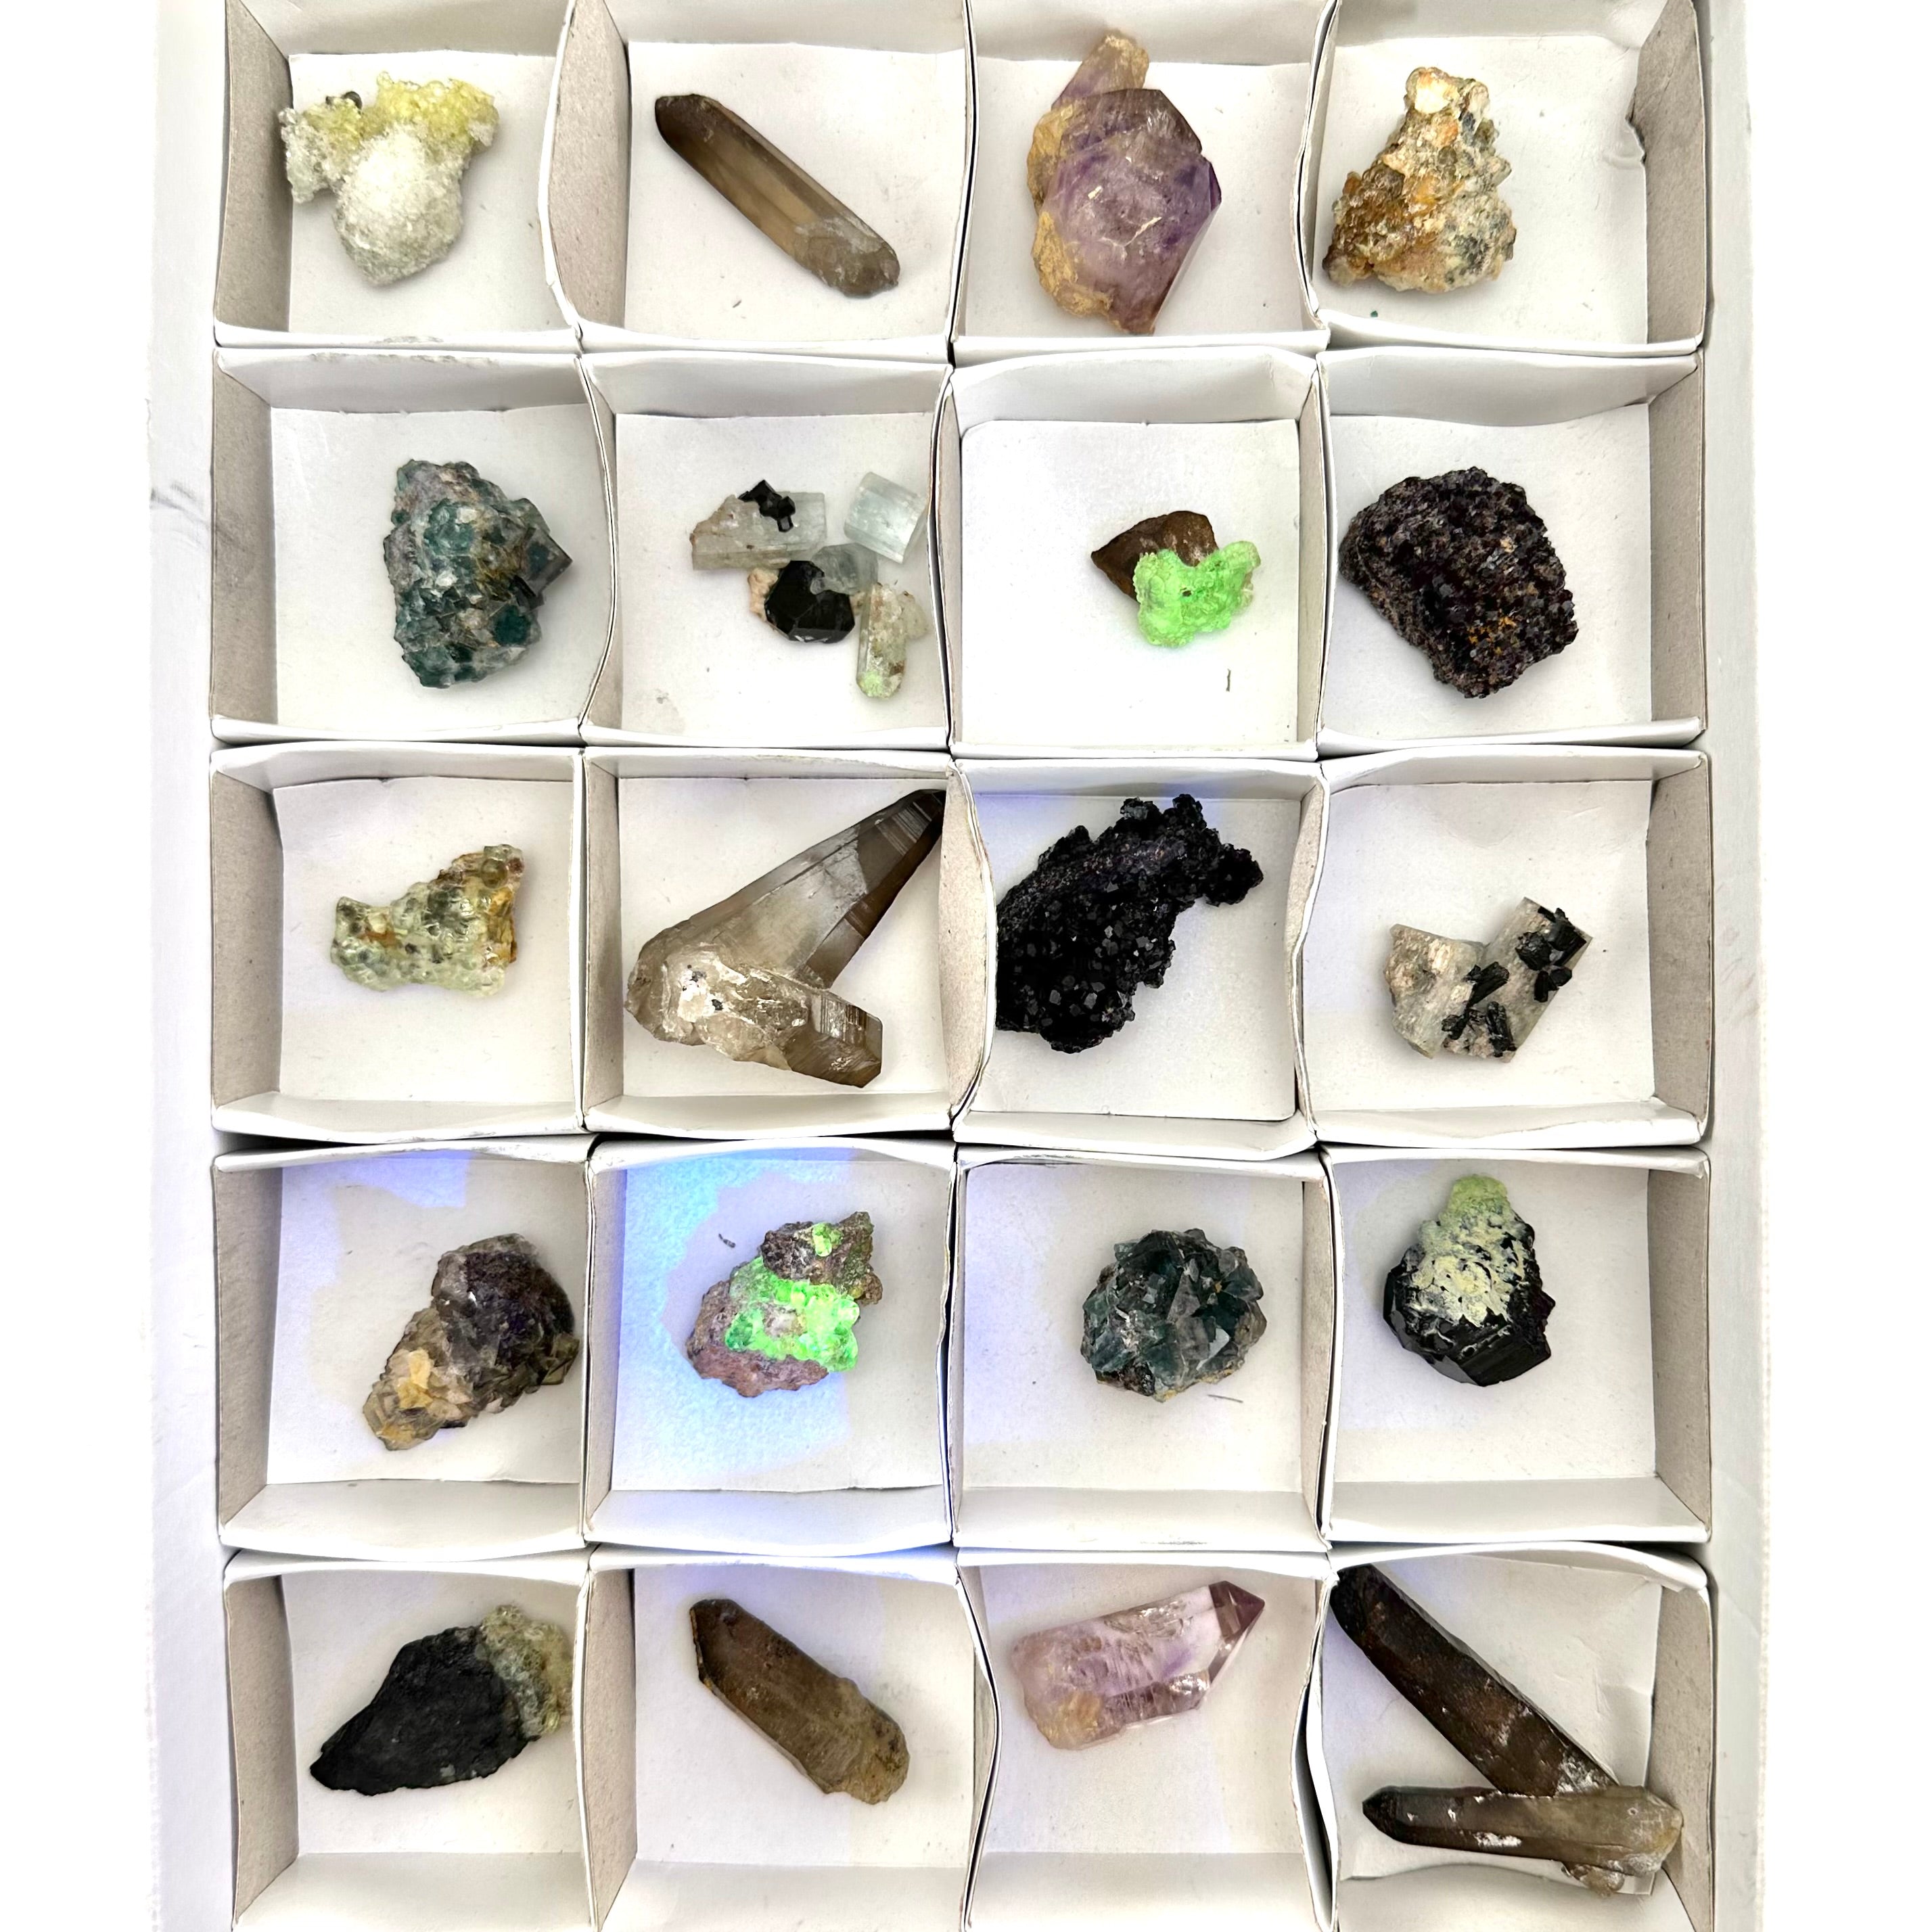 23 Piece/ 272g Flat of Mixed Minerals from Namibia | Okorusu Fluorite, Aquamarine, Hyalite Opal, Amethyst, Smoky Quartz